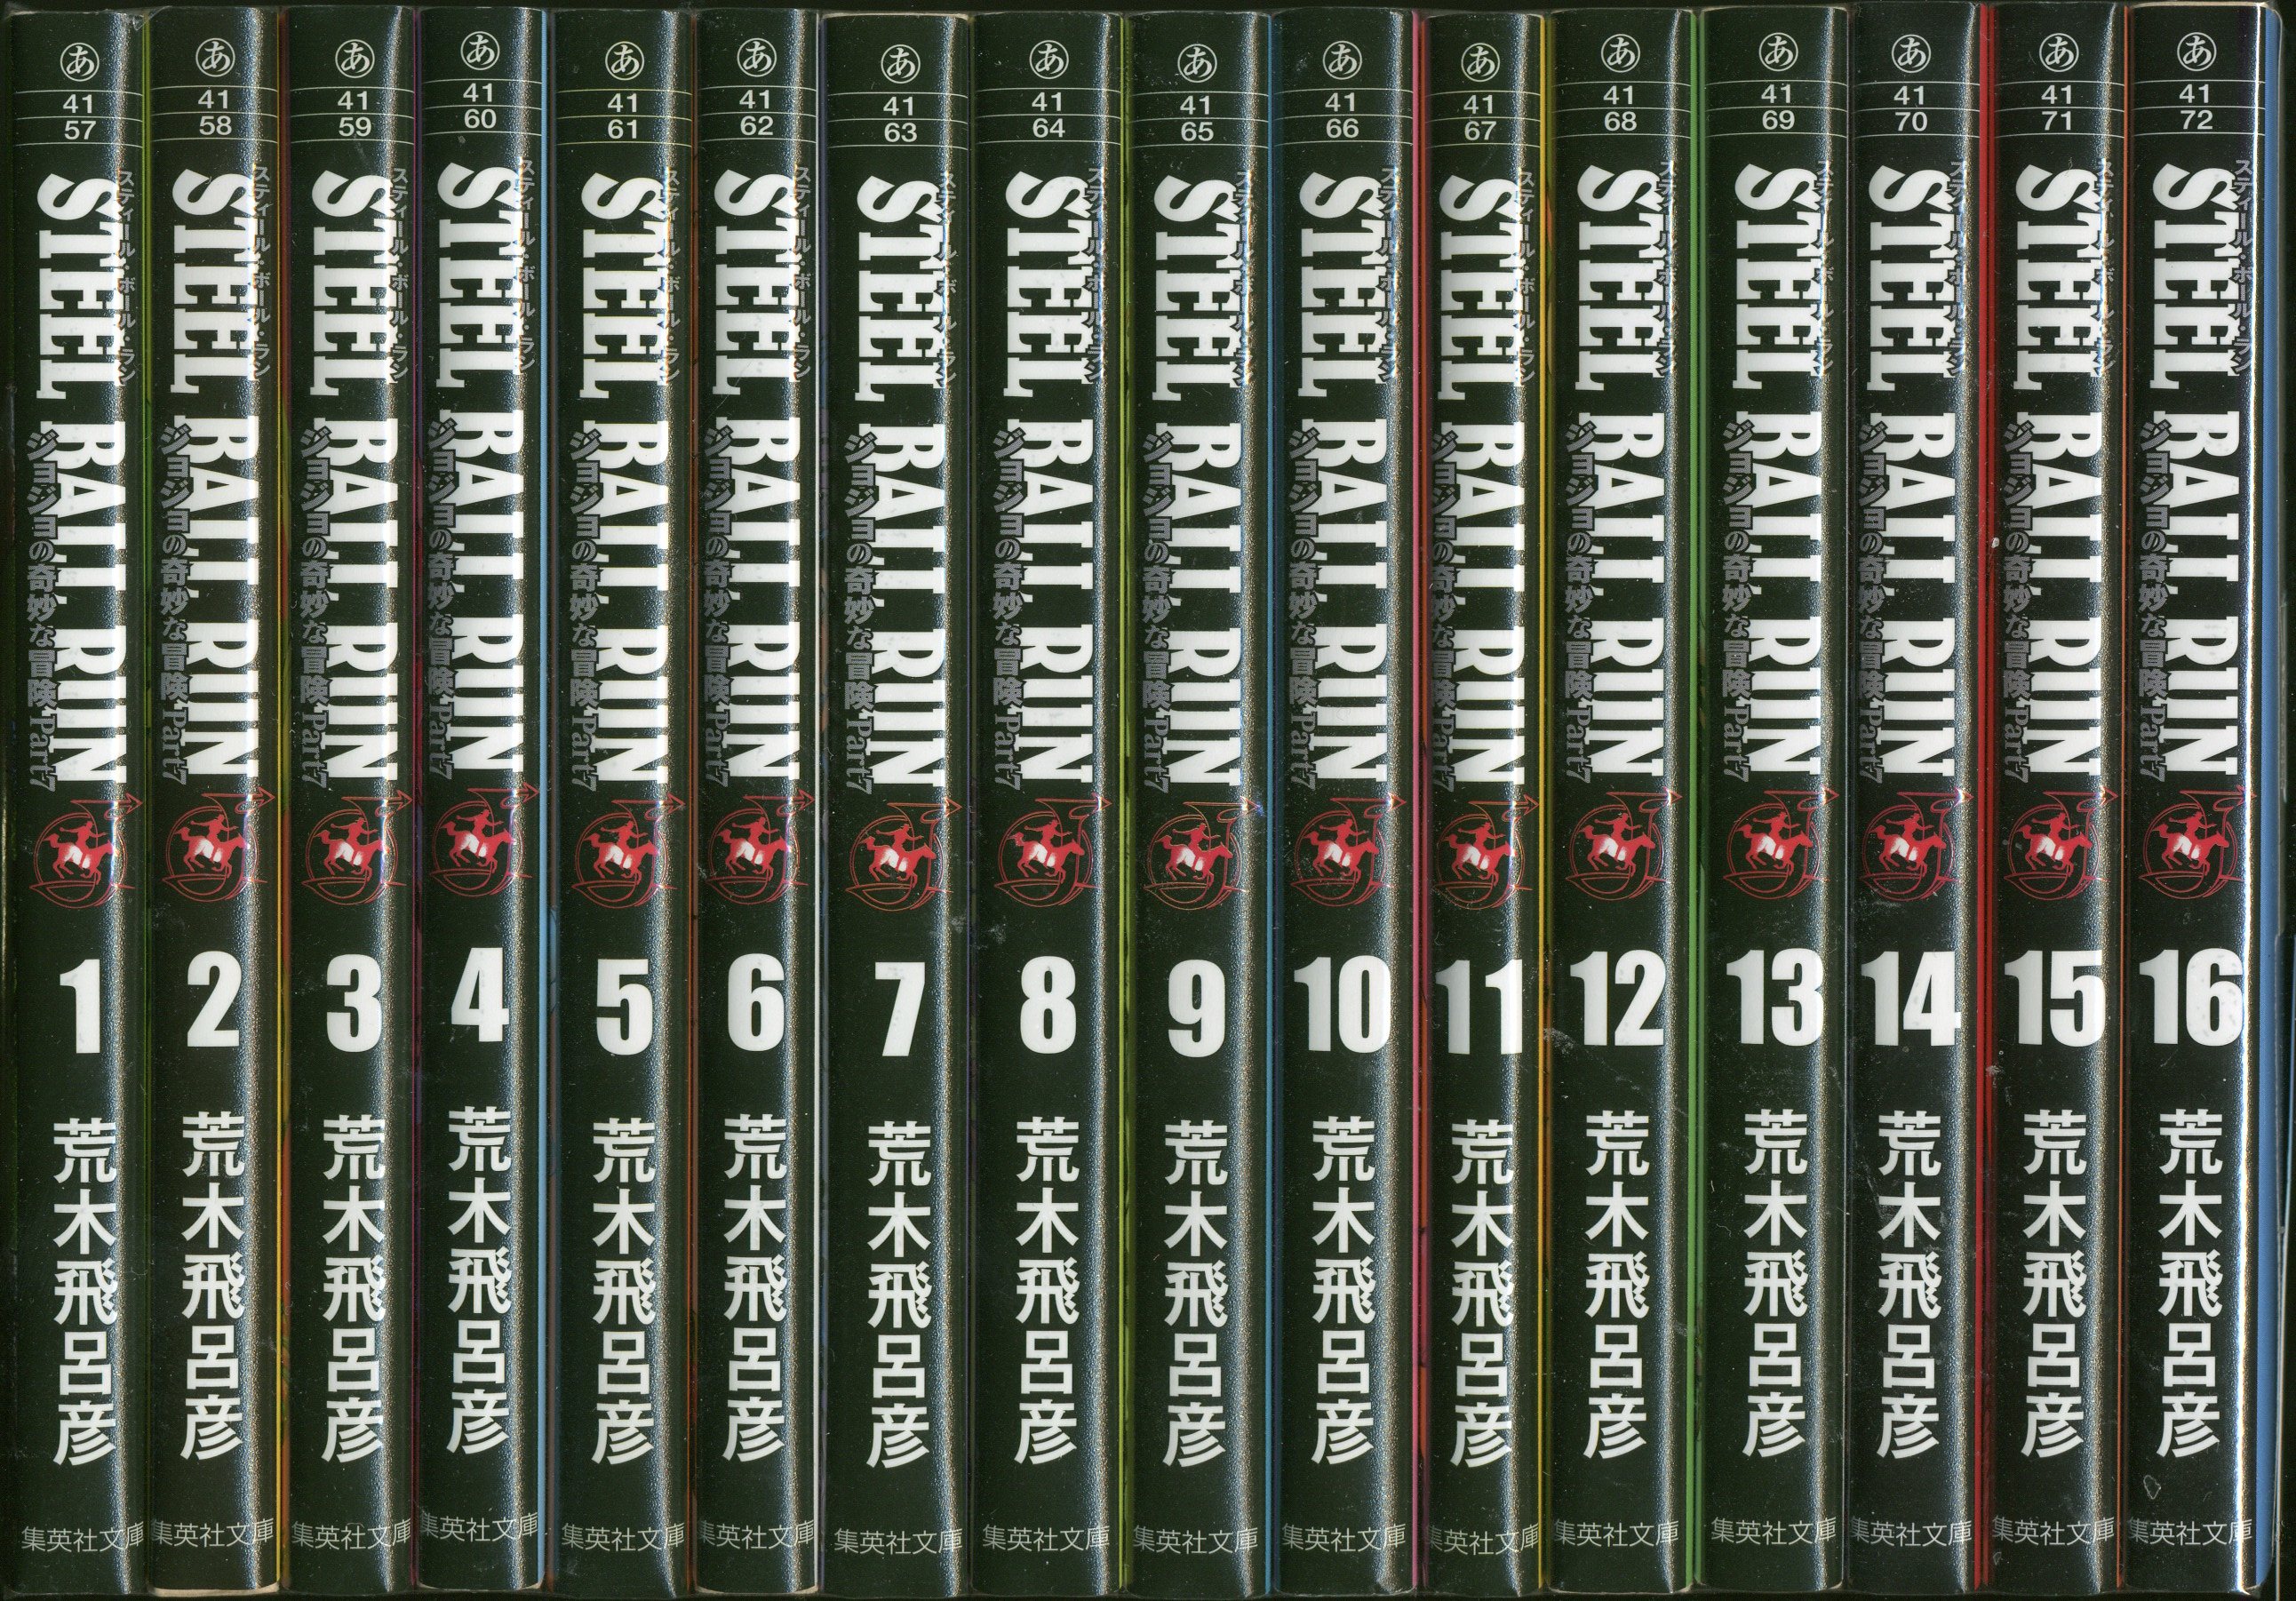 STEEL BALL RUN 荒木飛呂彦 全16巻 全巻セット 文庫版 スティール 